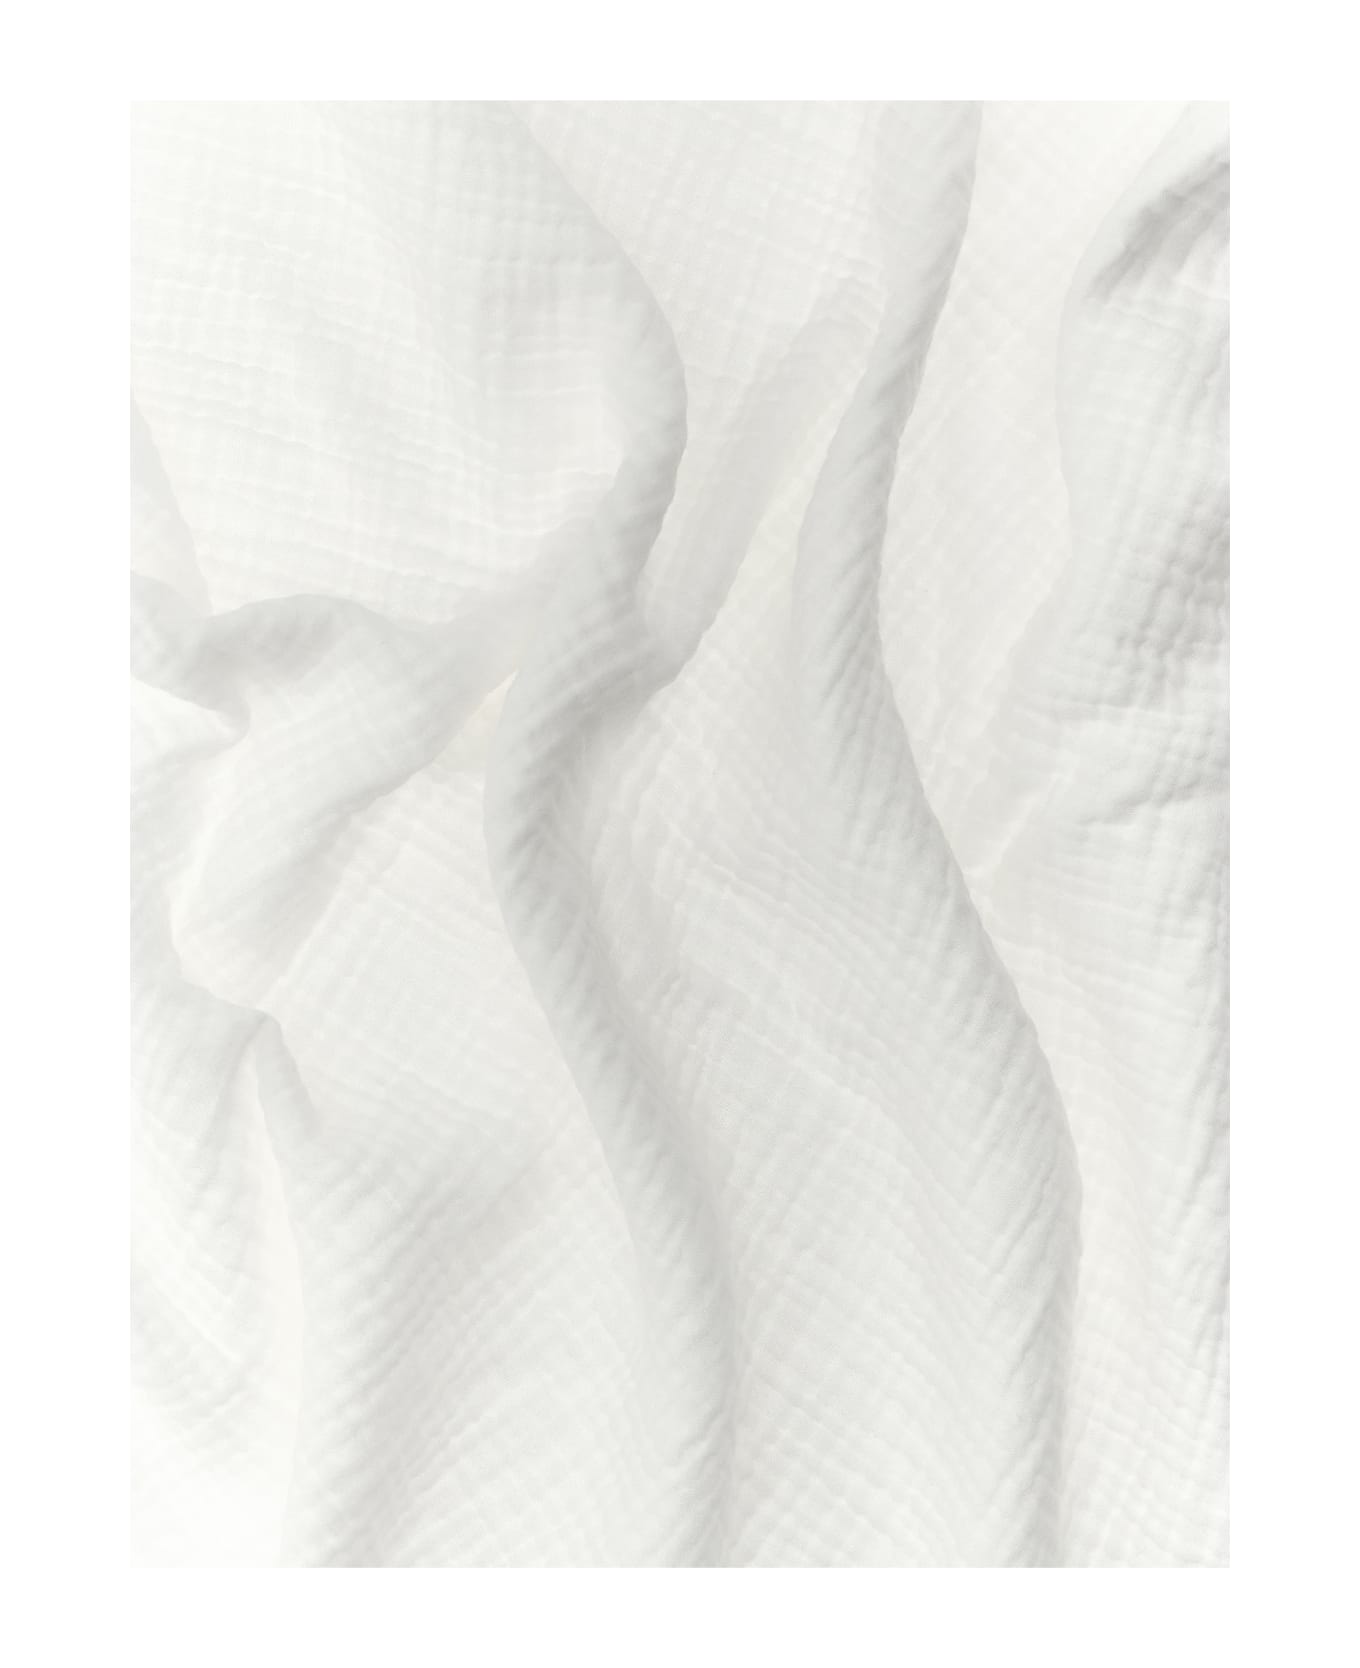 Burberry Muslin Cloth Check Detail - White